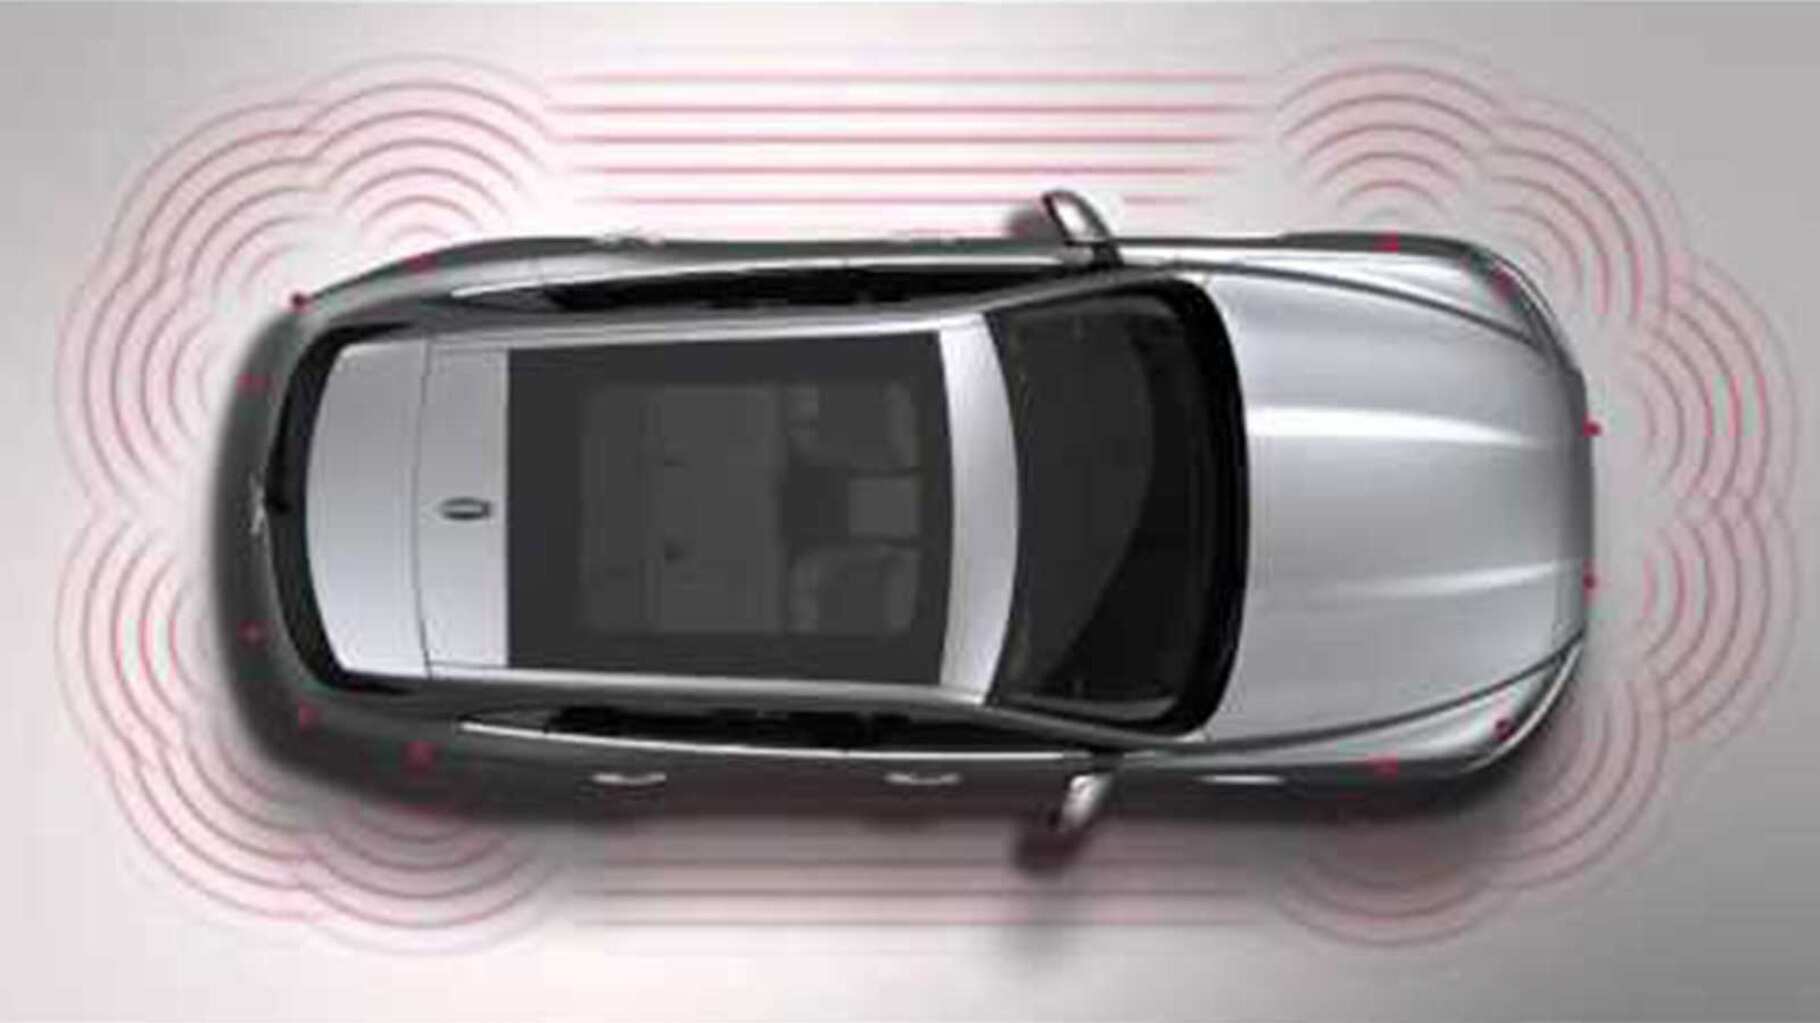  Jaguar F-PACE's InControl Touch Pro: Parking Aid System information video.